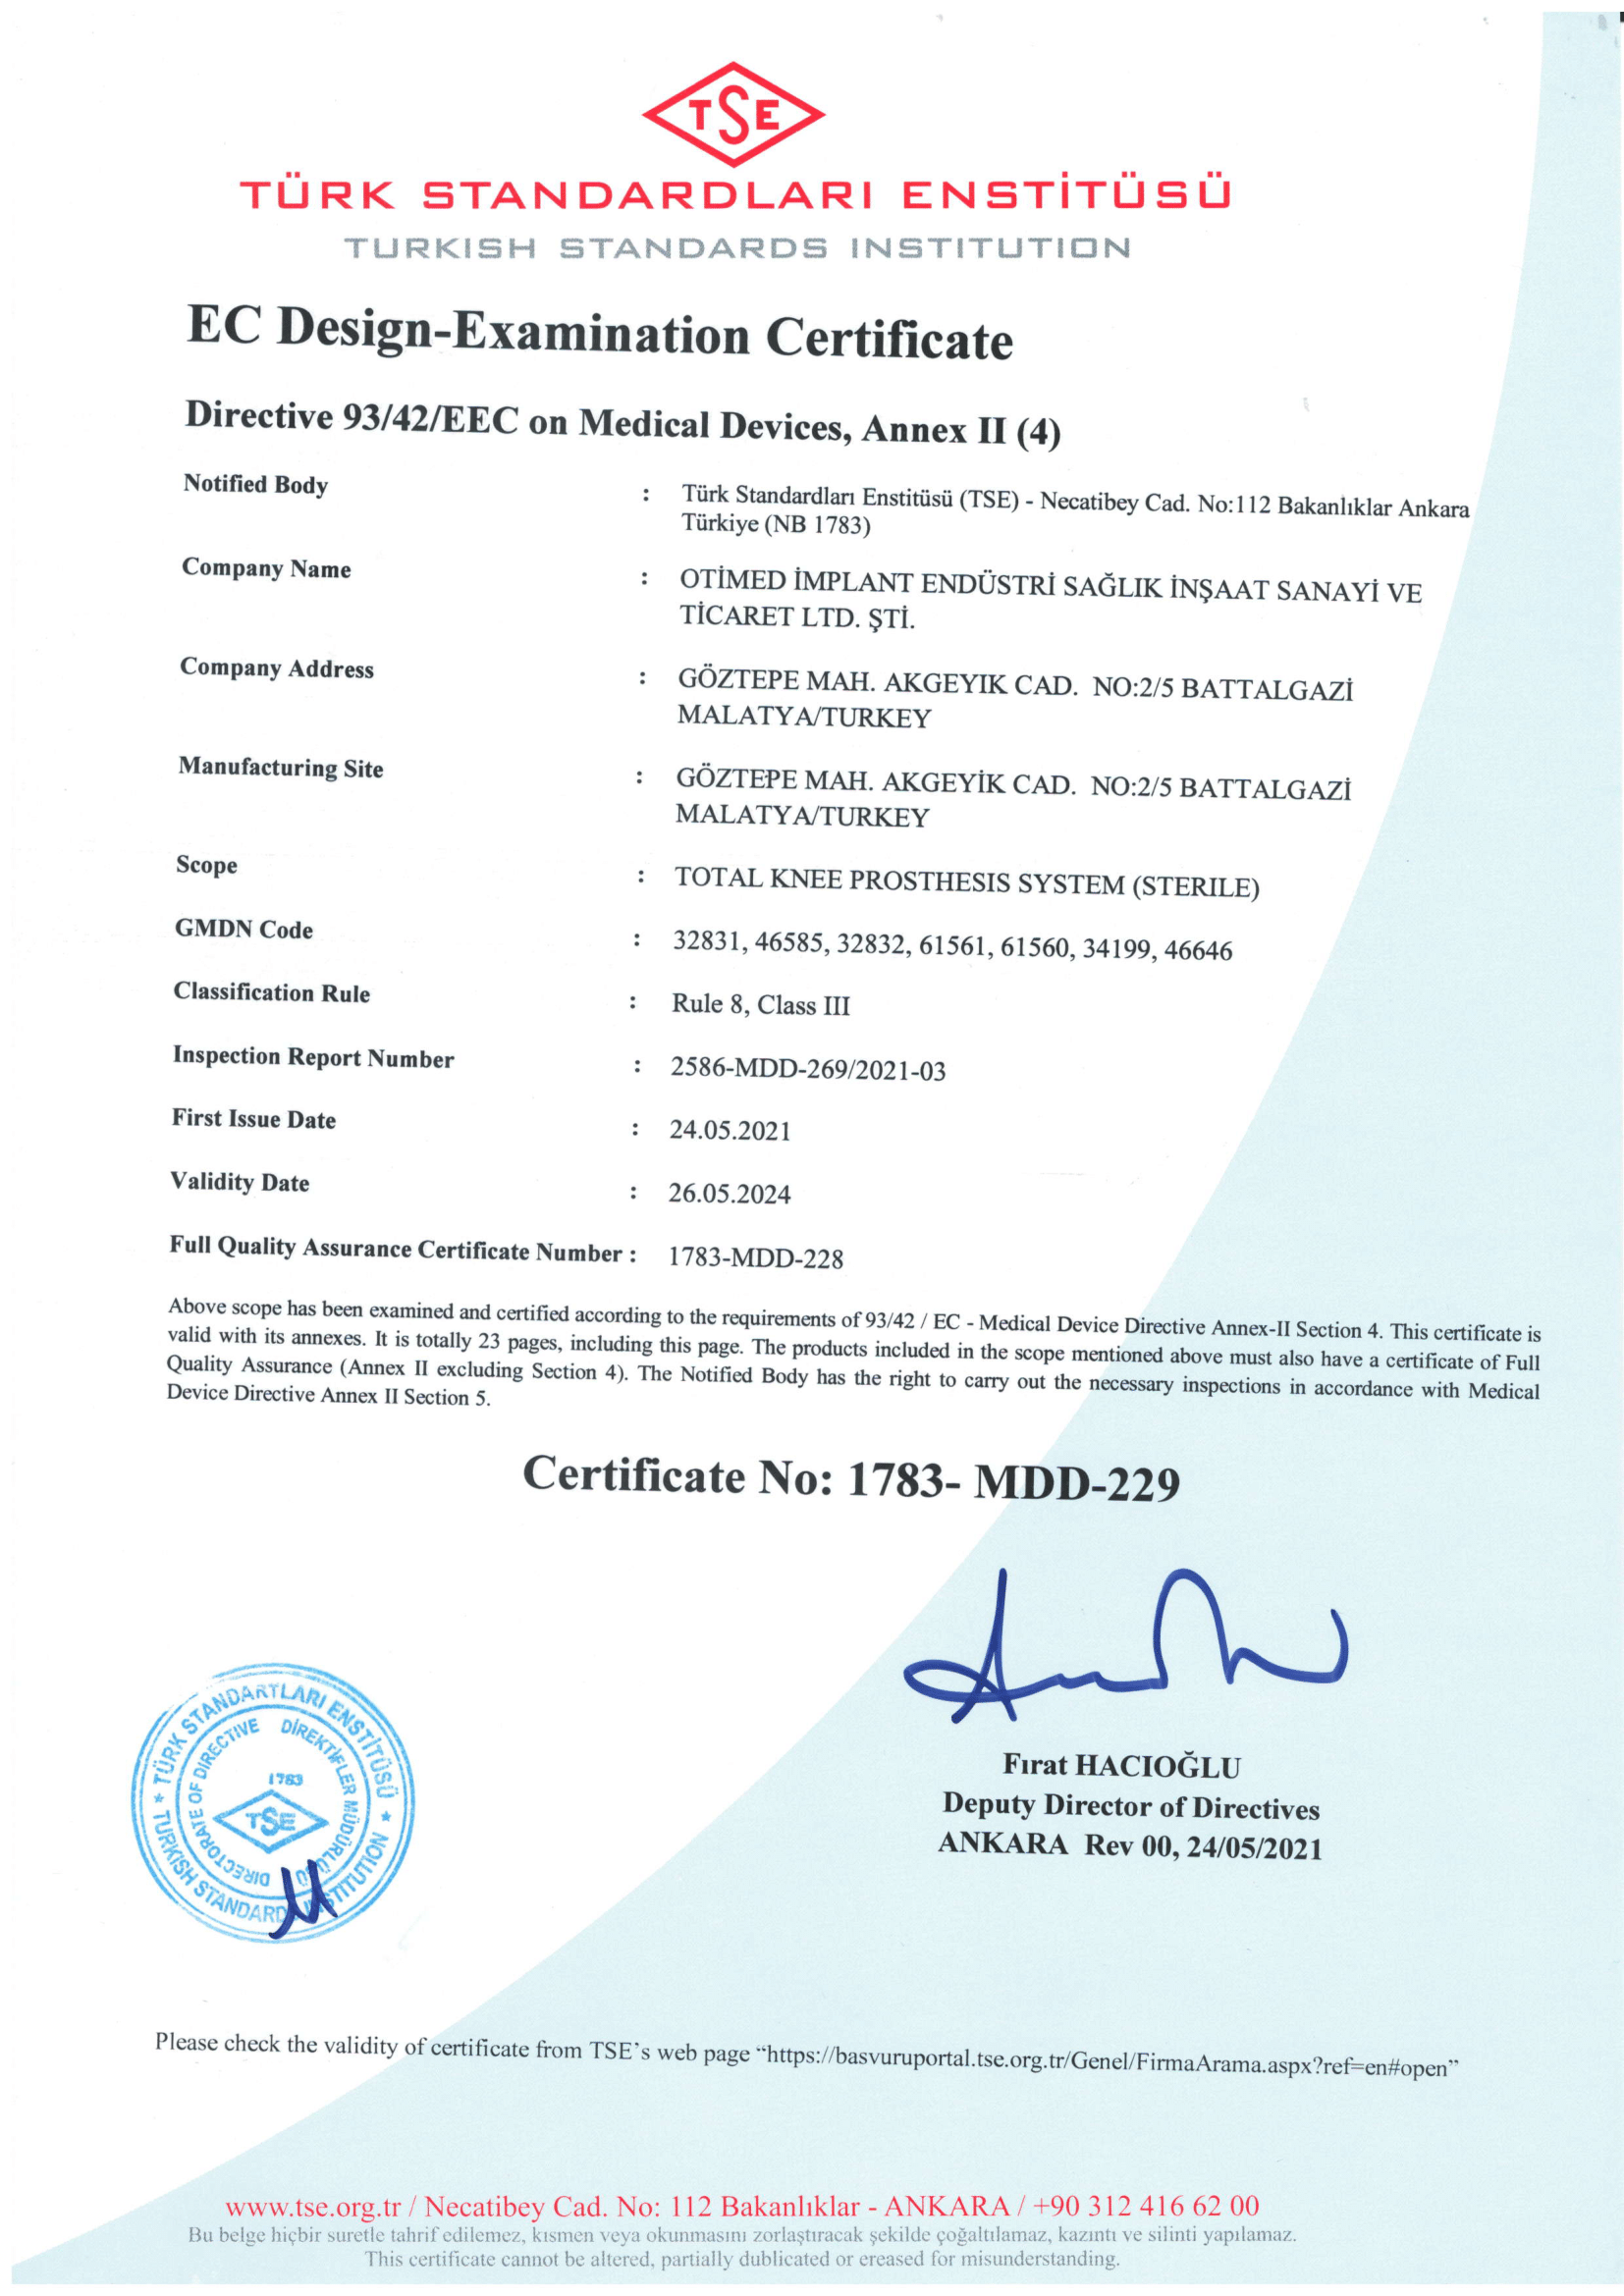 Knee Prosthesis / EC Design Examination Certificate